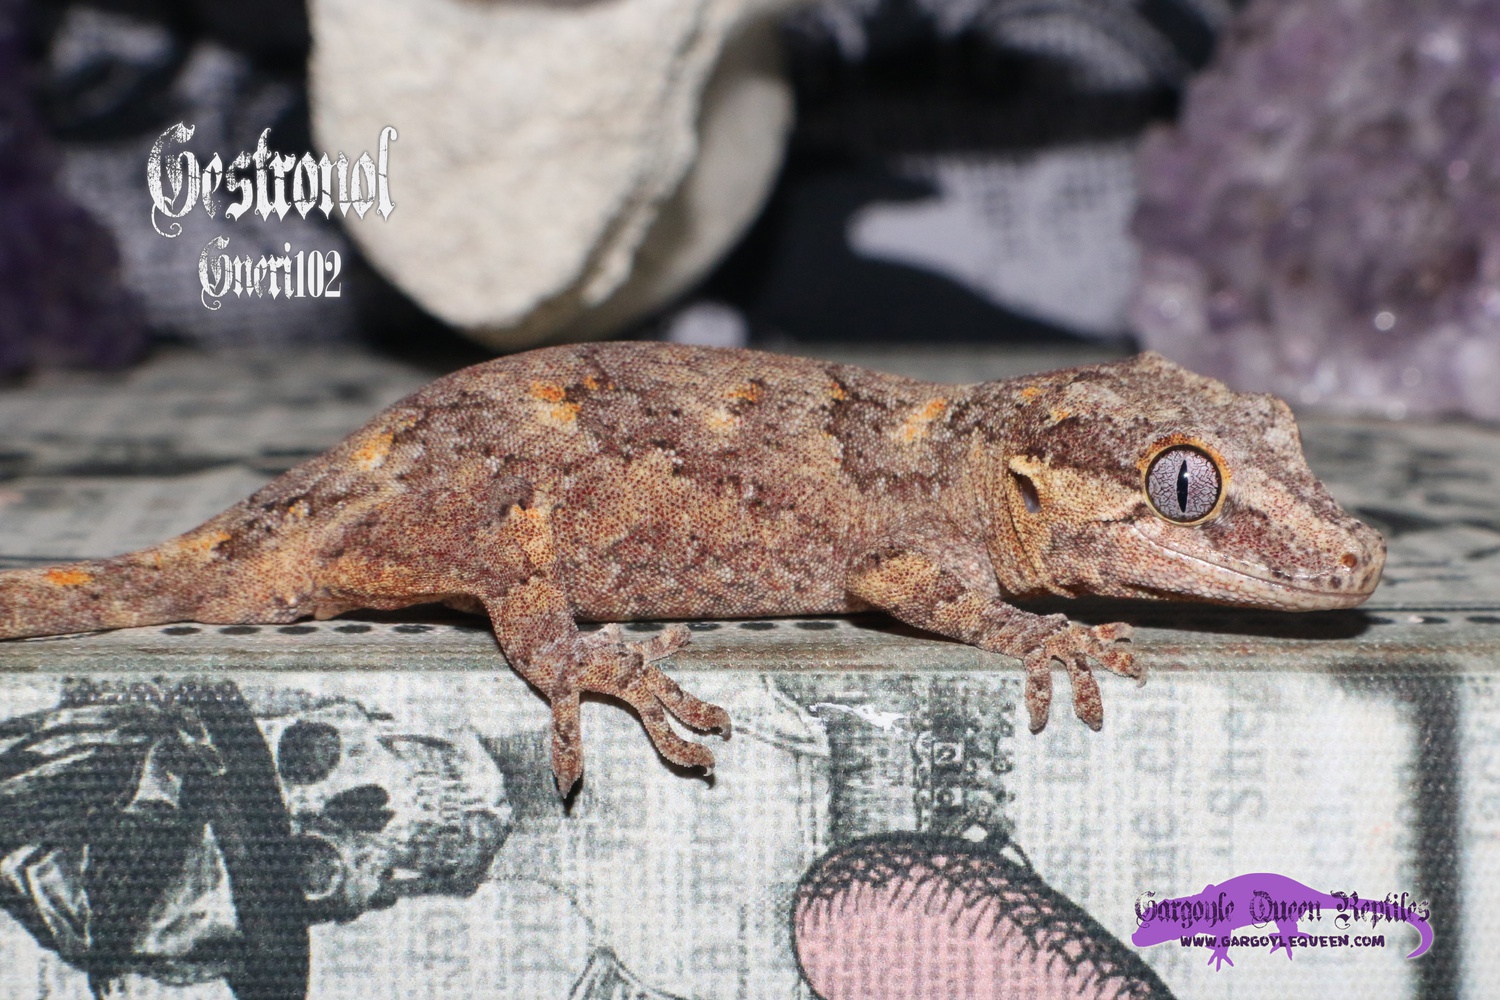 "Gestronol" Orange Blotch Banded Reticulated Gargoyle Gecko by Gargoyle Queen Reptiles